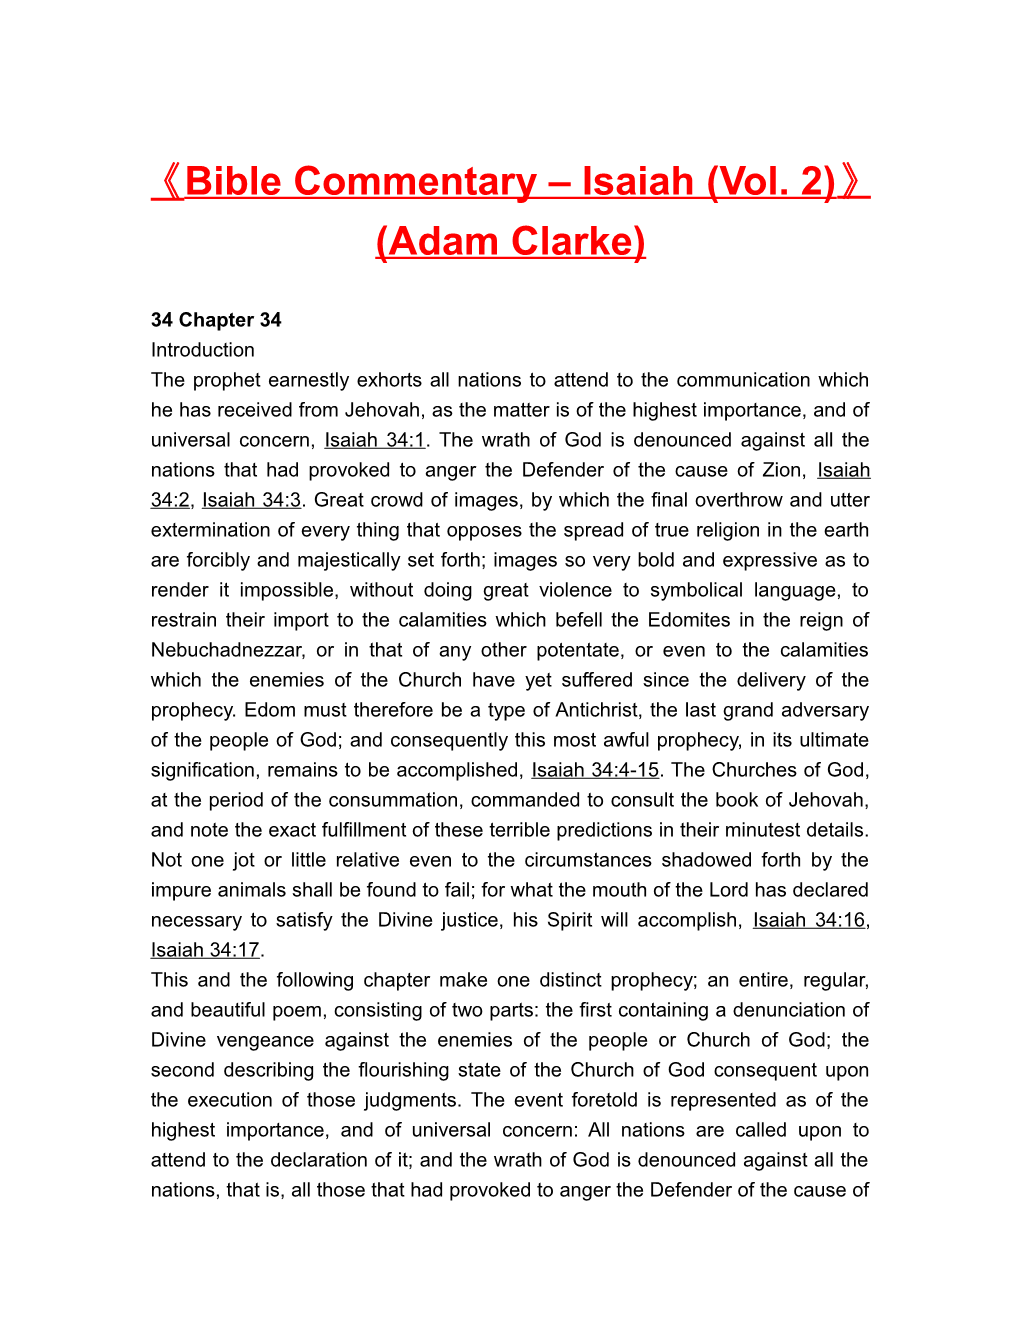 Bible Commentary Isaiah (Vol. 2) (Adam Clarke)